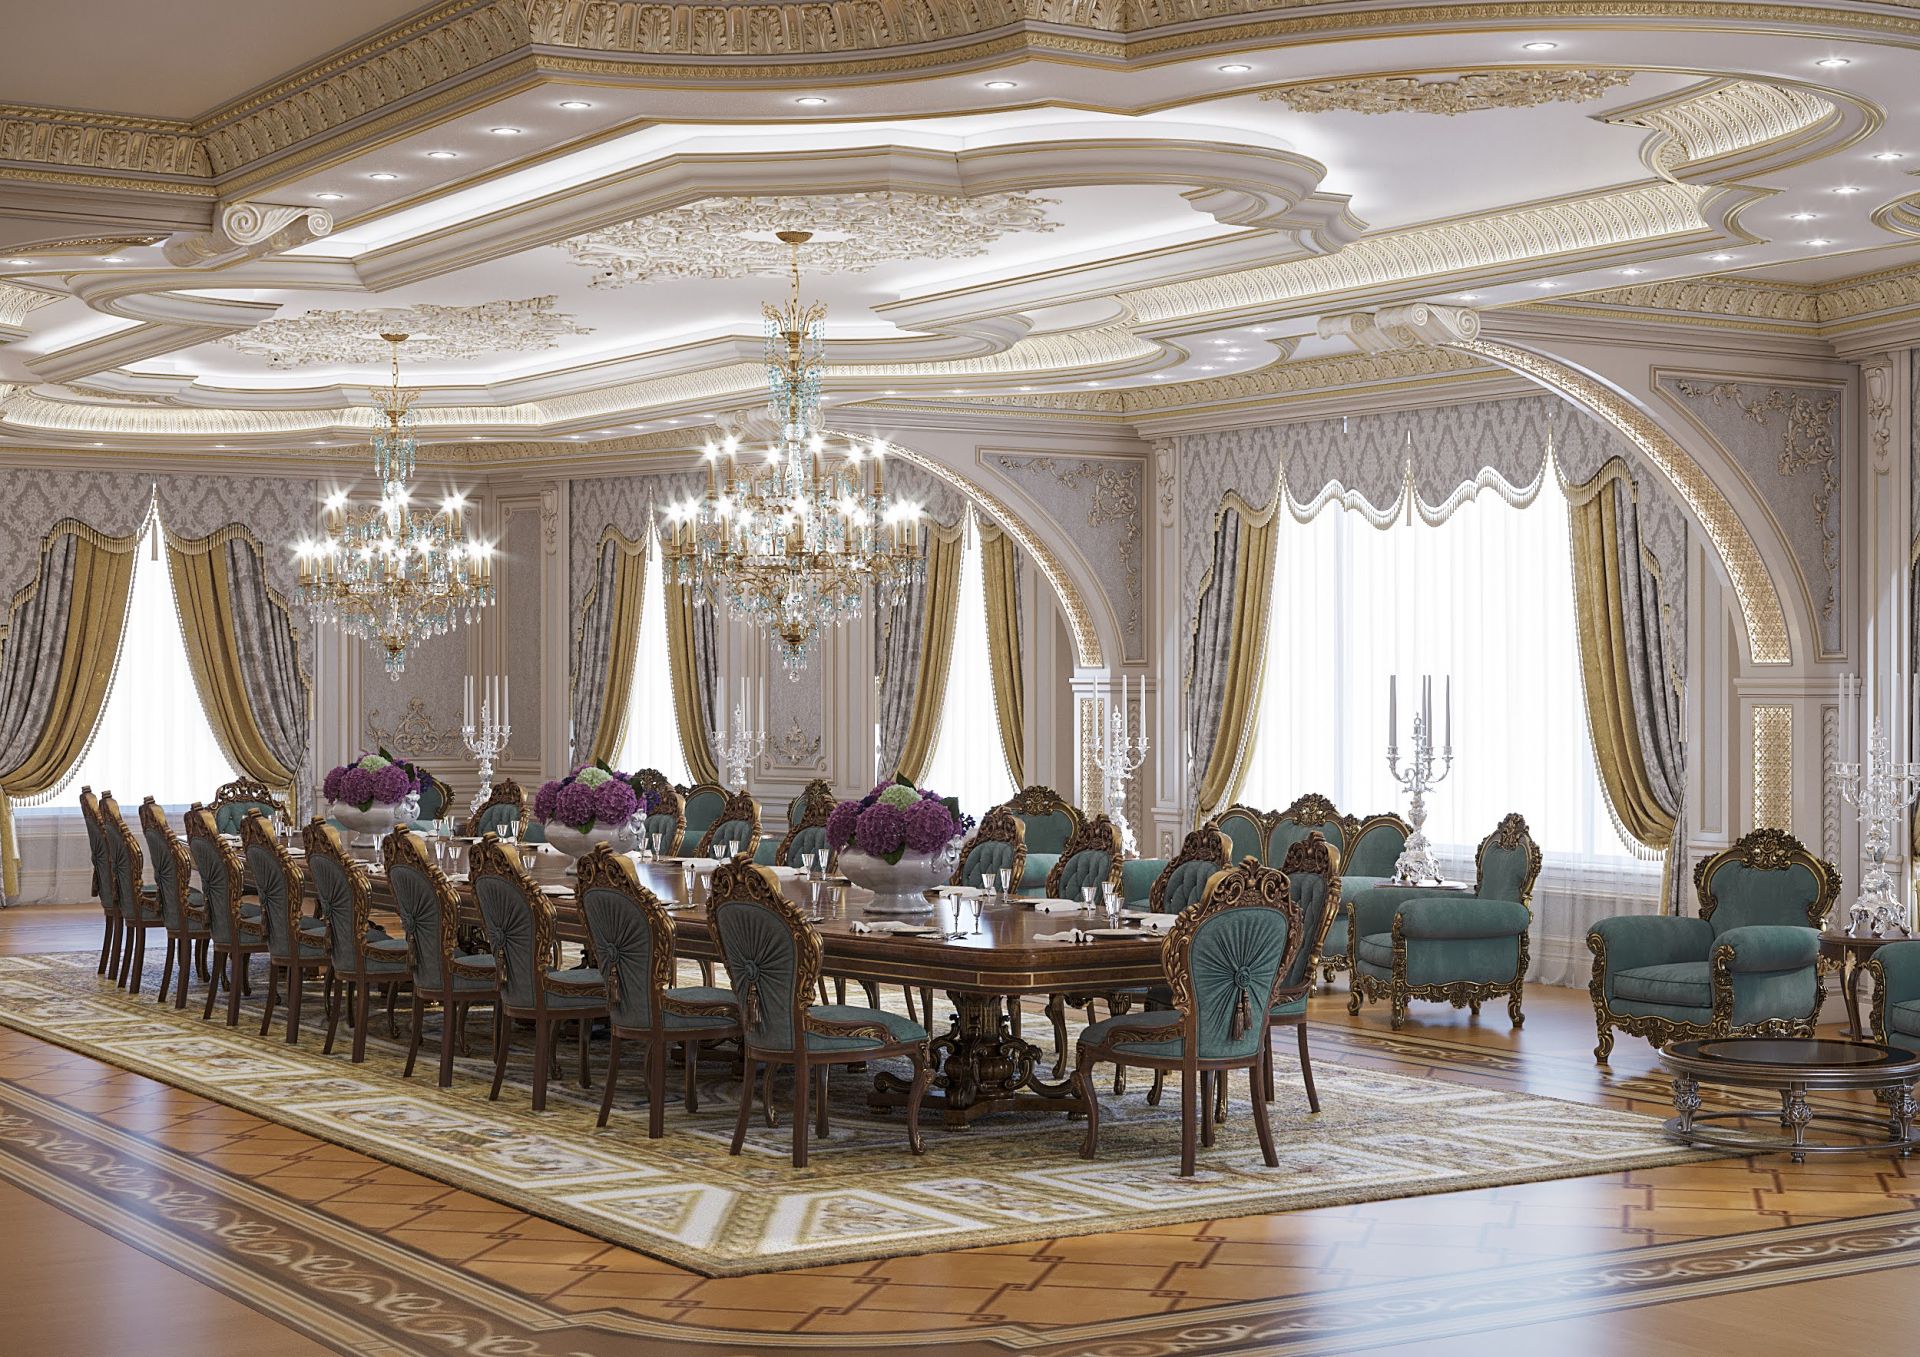 Luxurious banquet hall interior